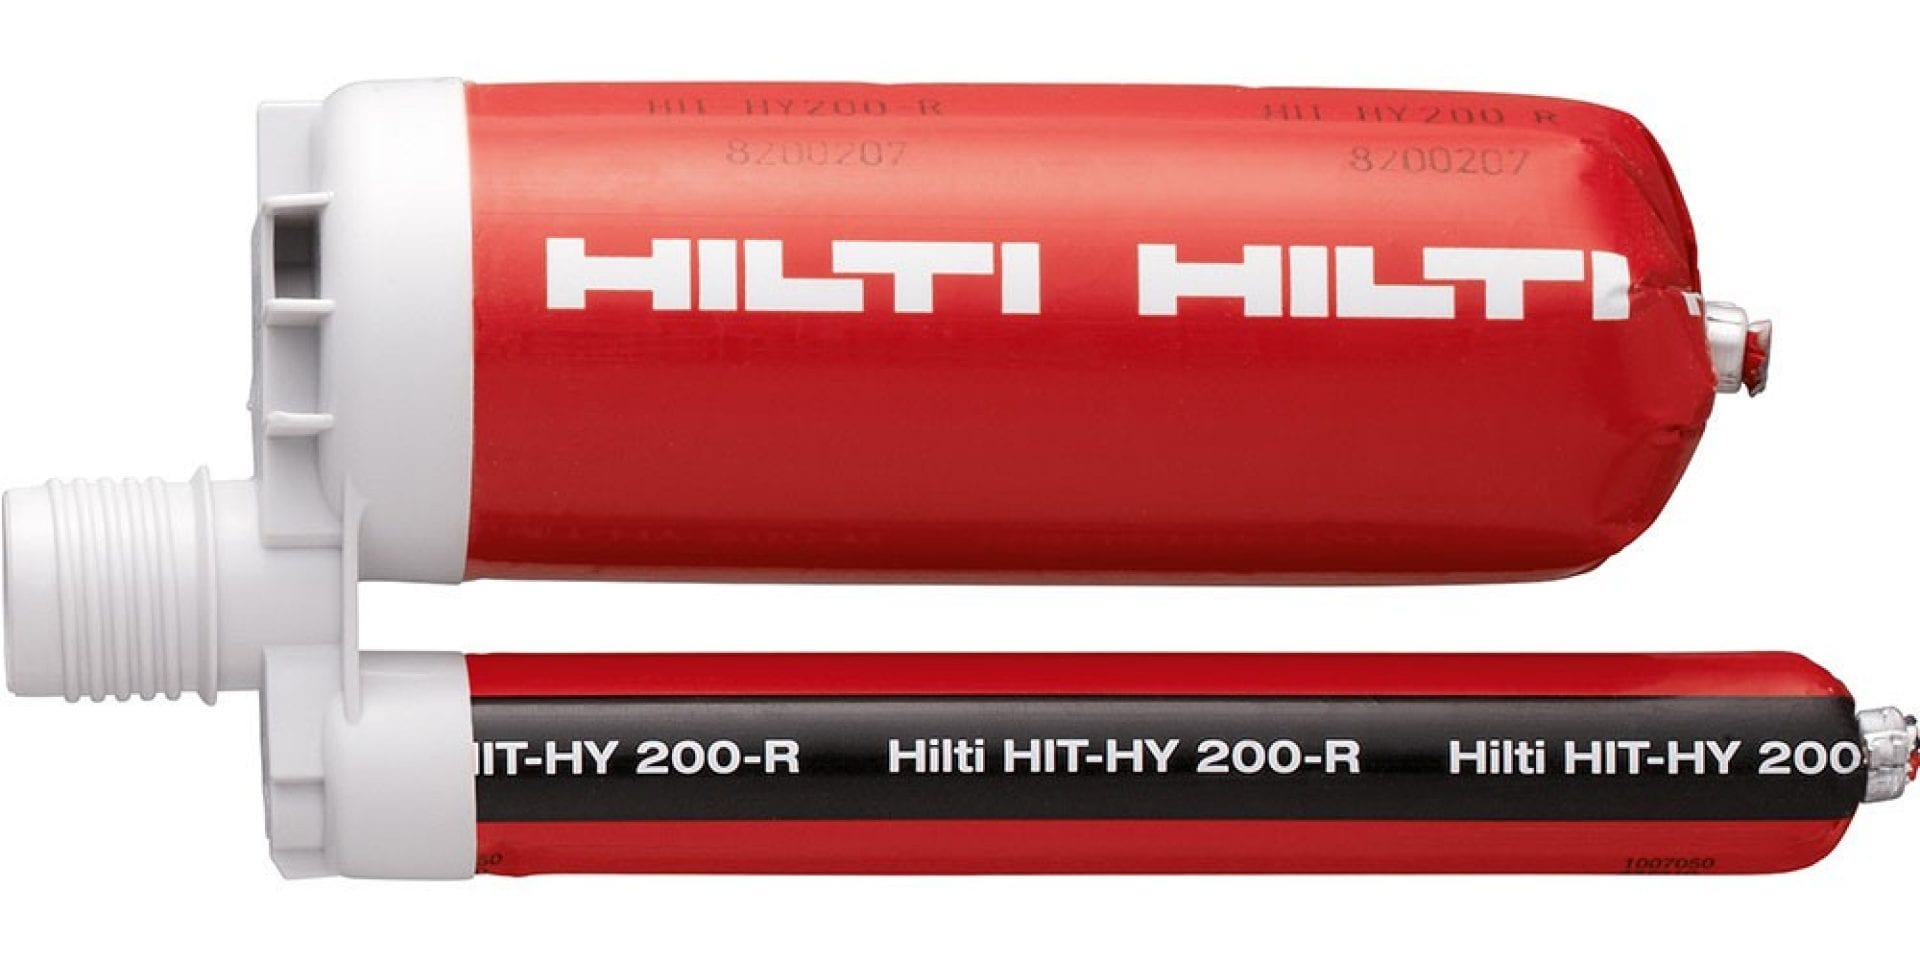 Hilti HIT-HY 200-R V3